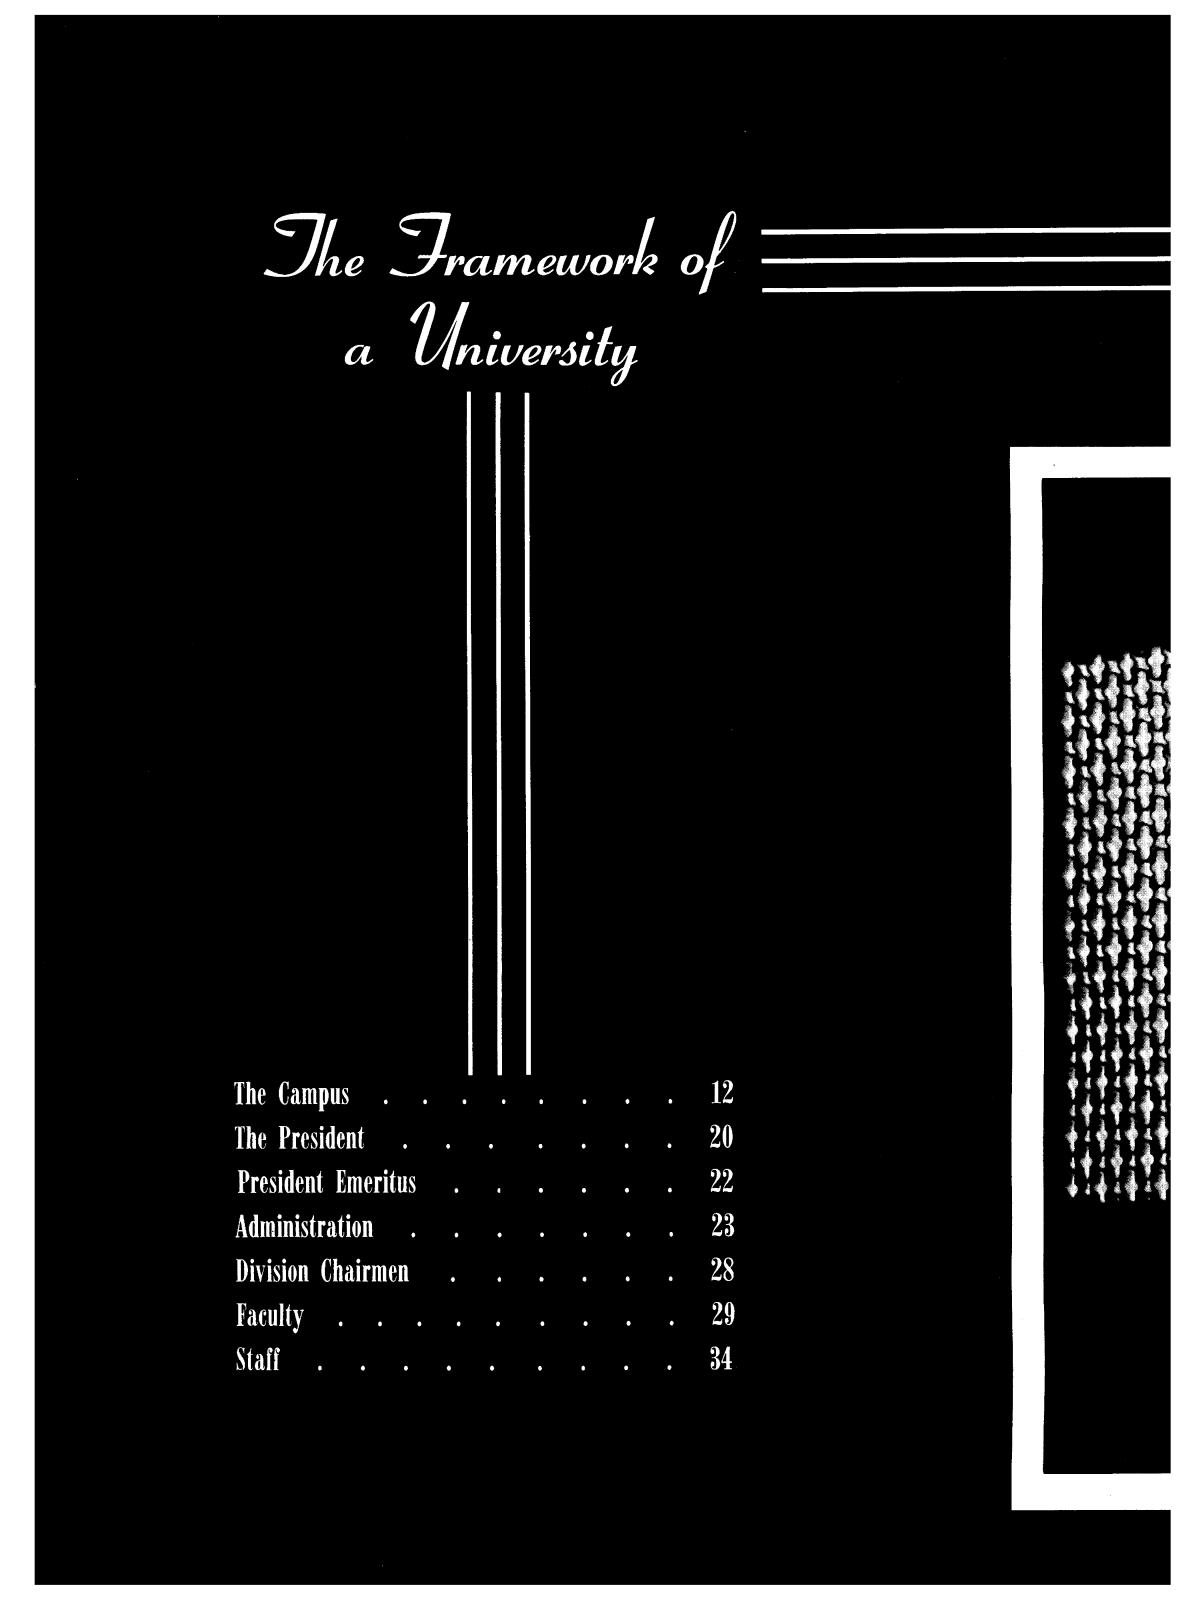 The Bronco, Yearbook of Hardin-Simmons University, 1962
                                                
                                                    10
                                                